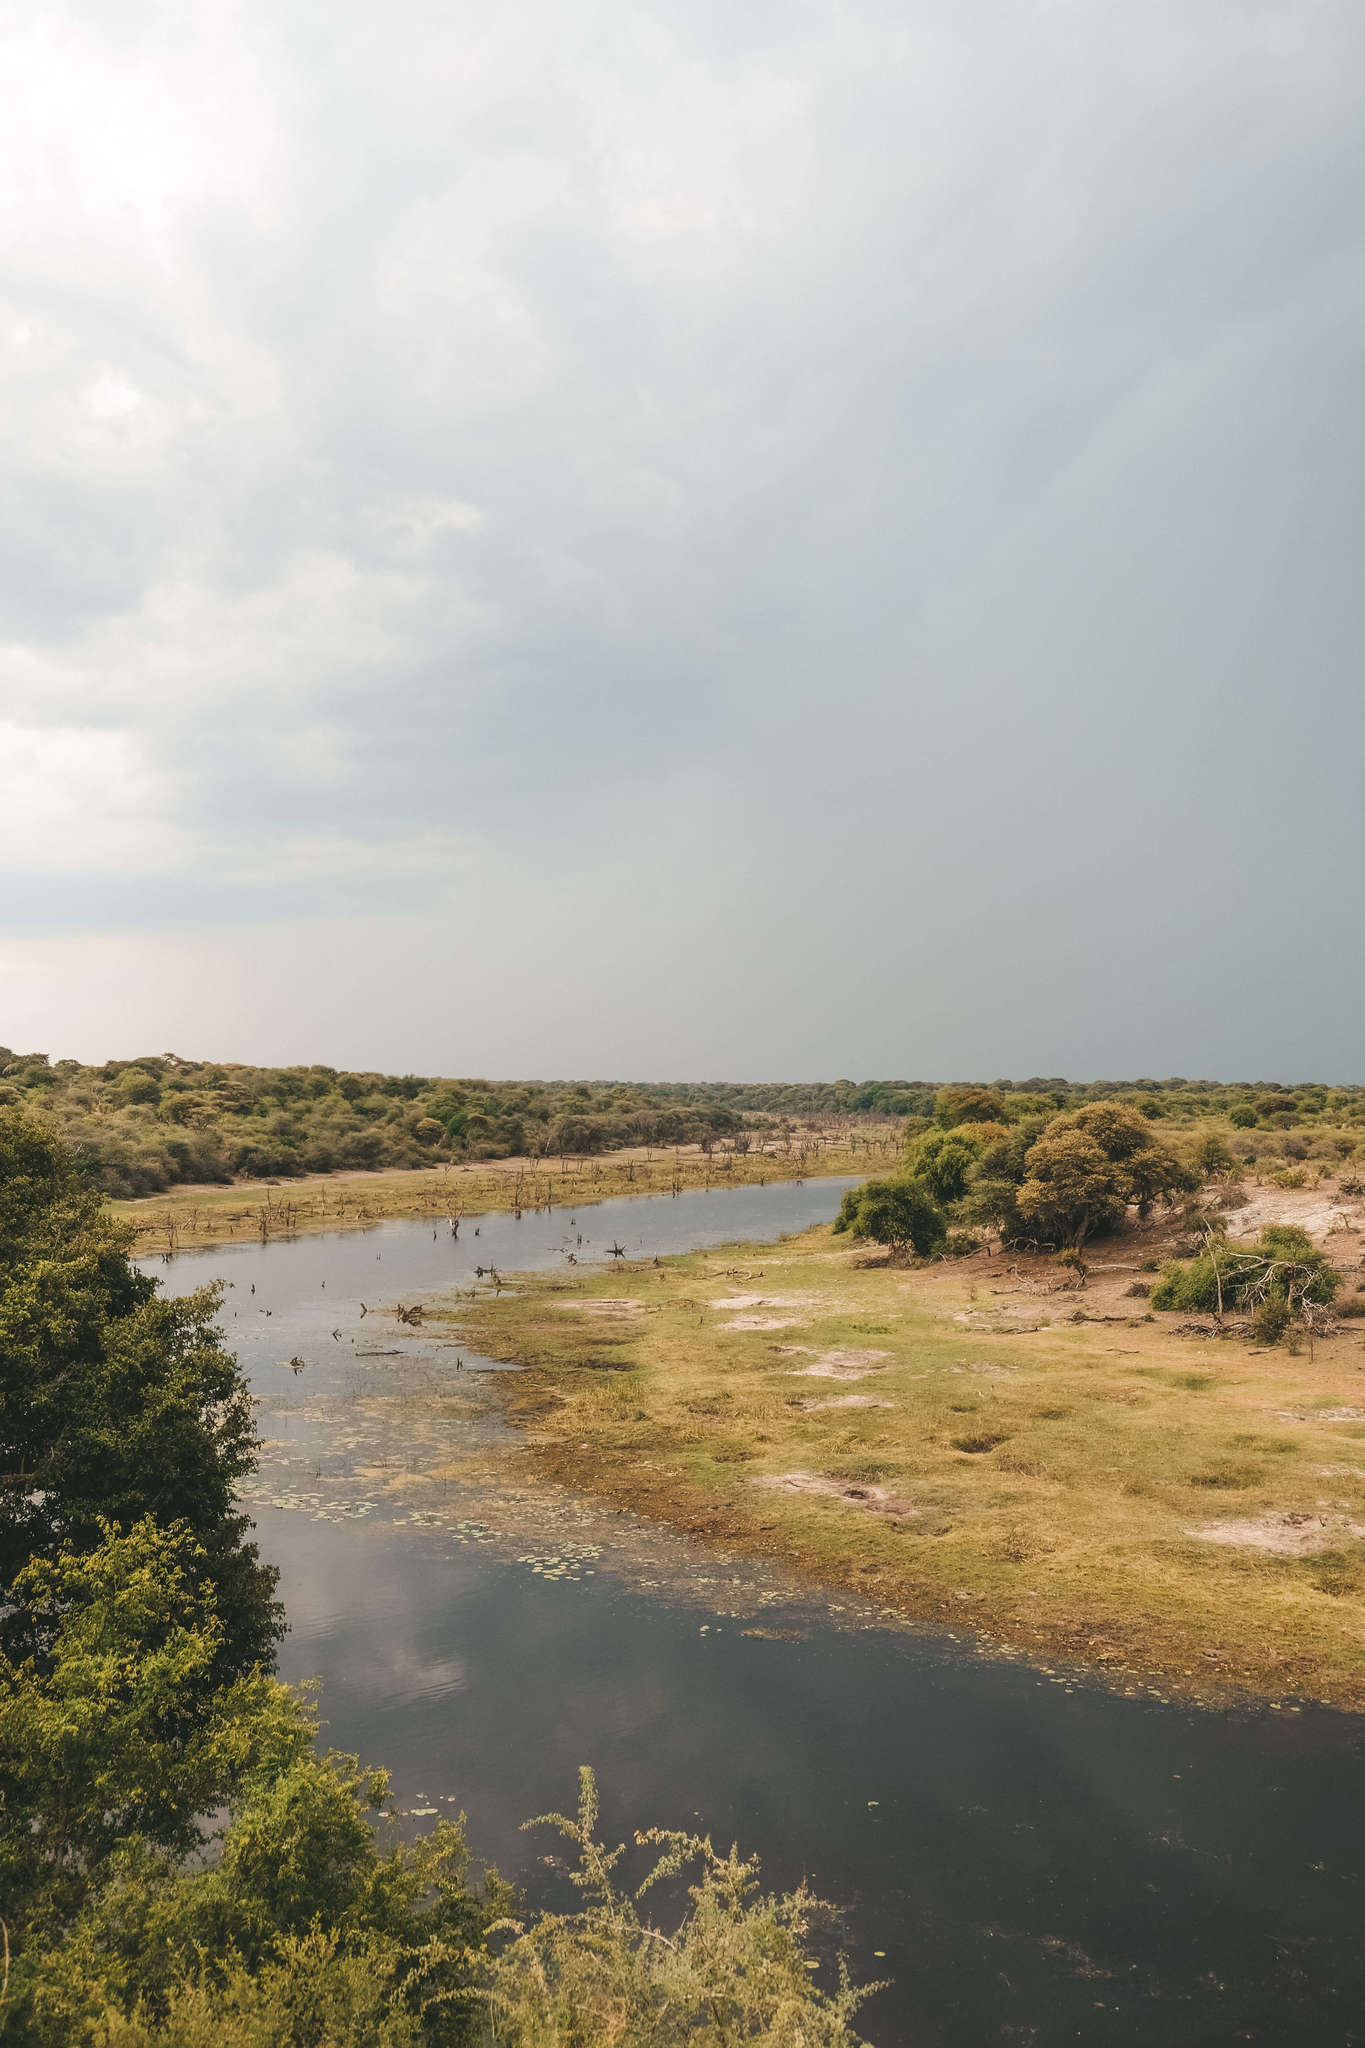 Landscape at Meno a Kwena in Botswana